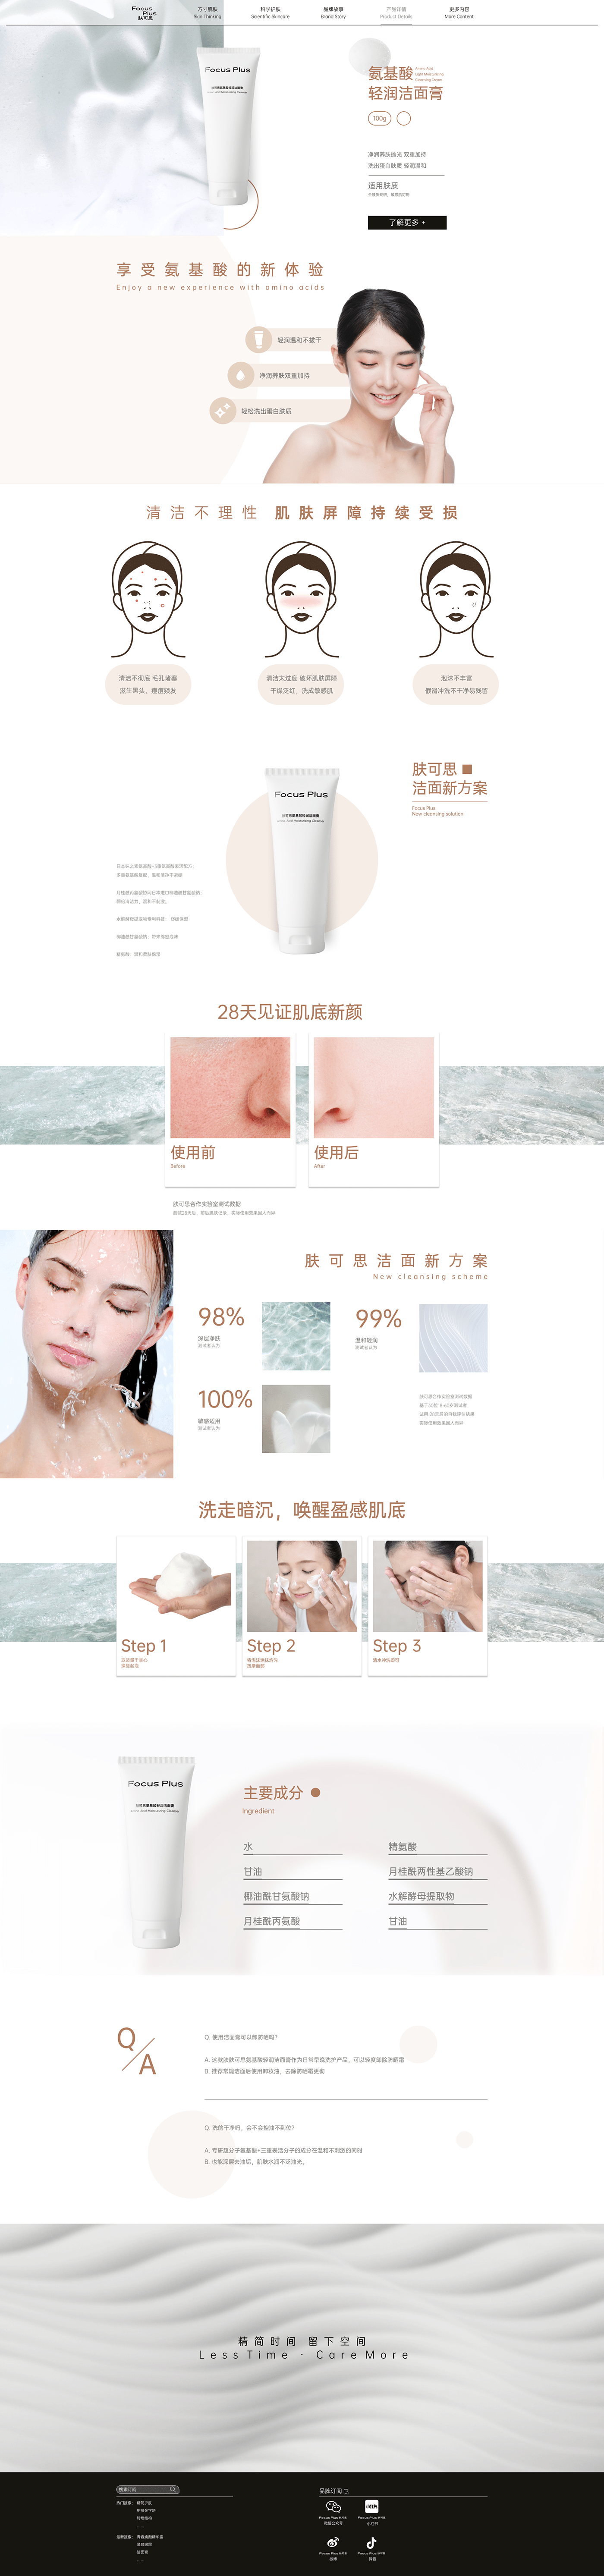 UI/UX 品牌设计 官网 平面设计 护肤品牌 网页 视觉设计